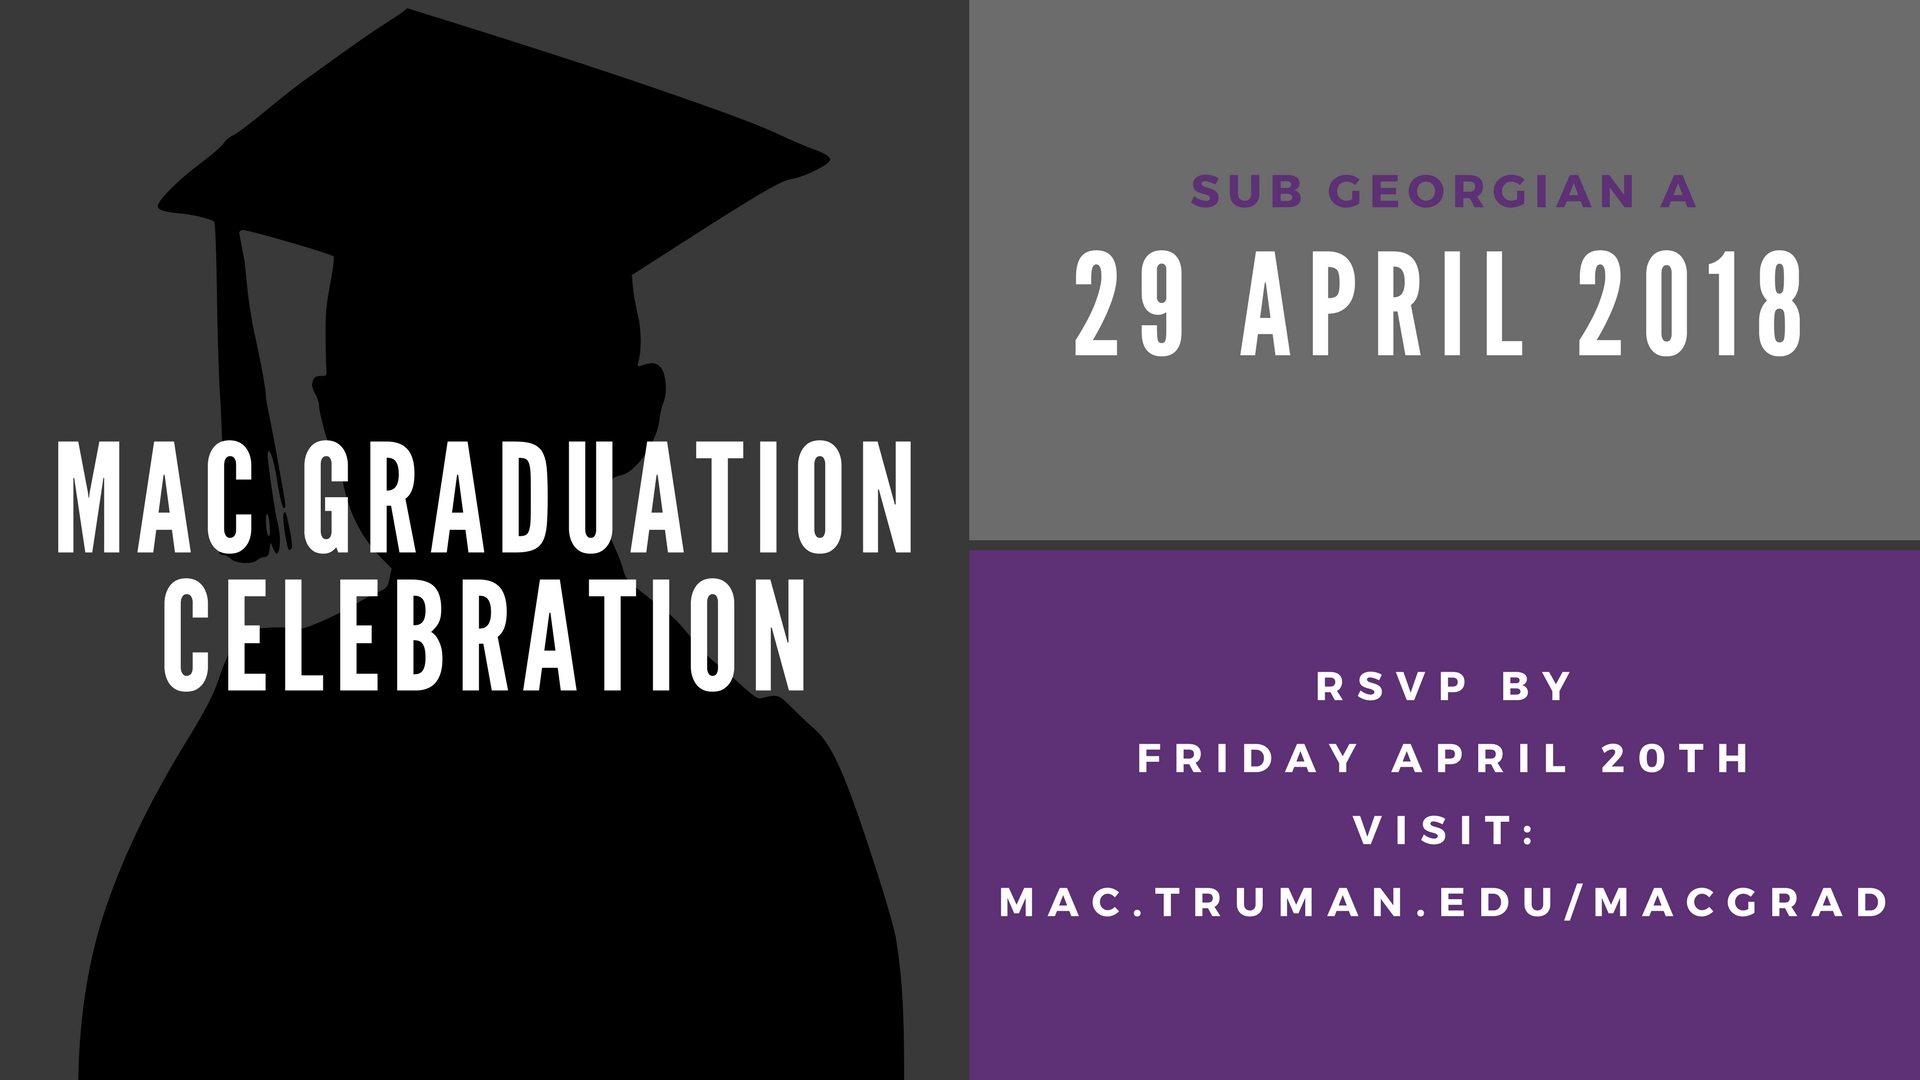 MAC graduation celebration 29 April 2018